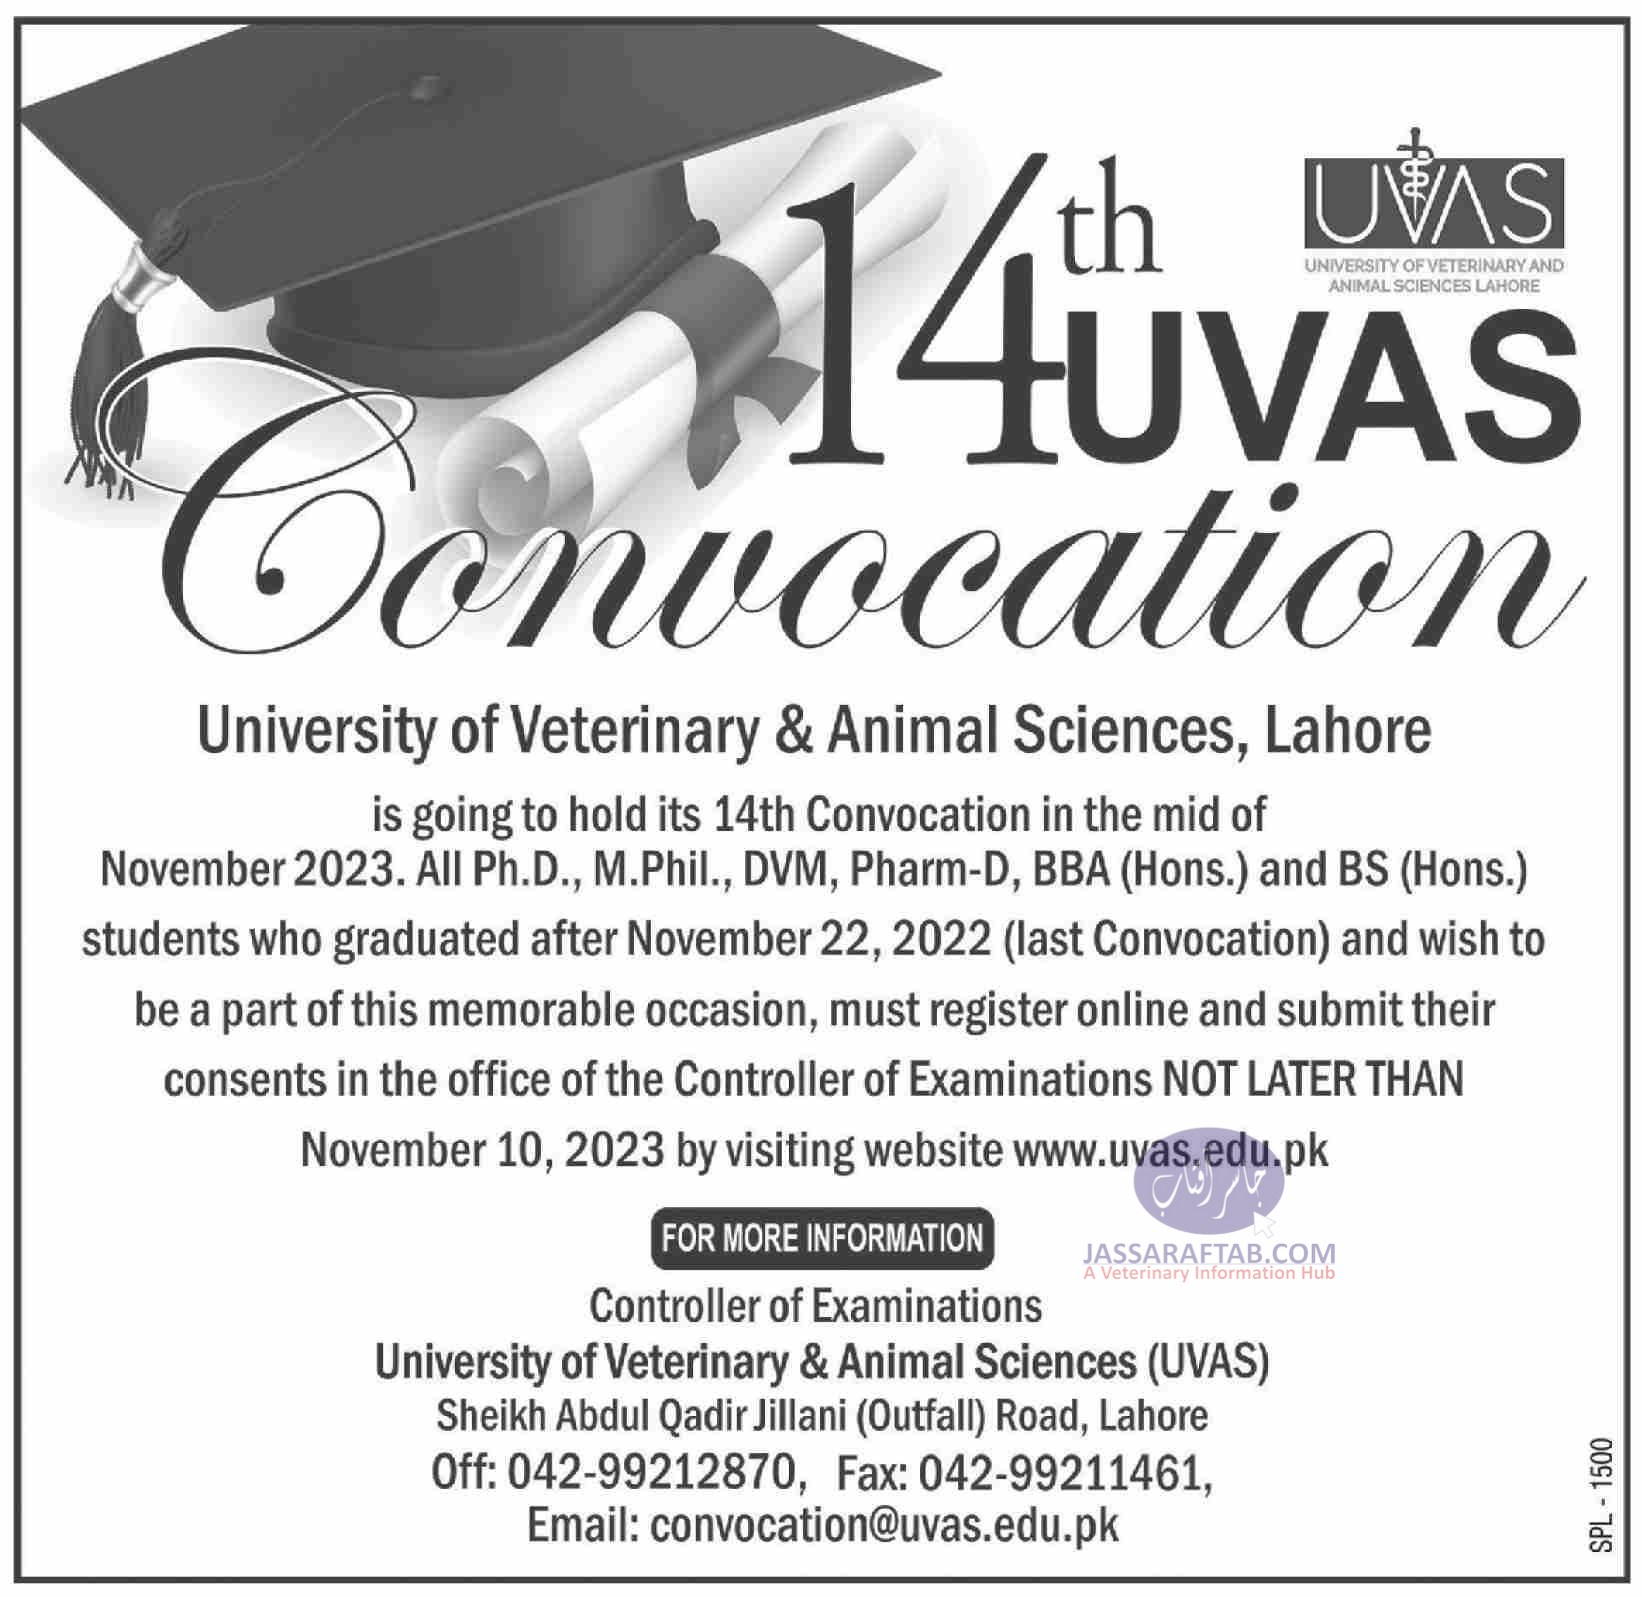 14th UVAS Convocation